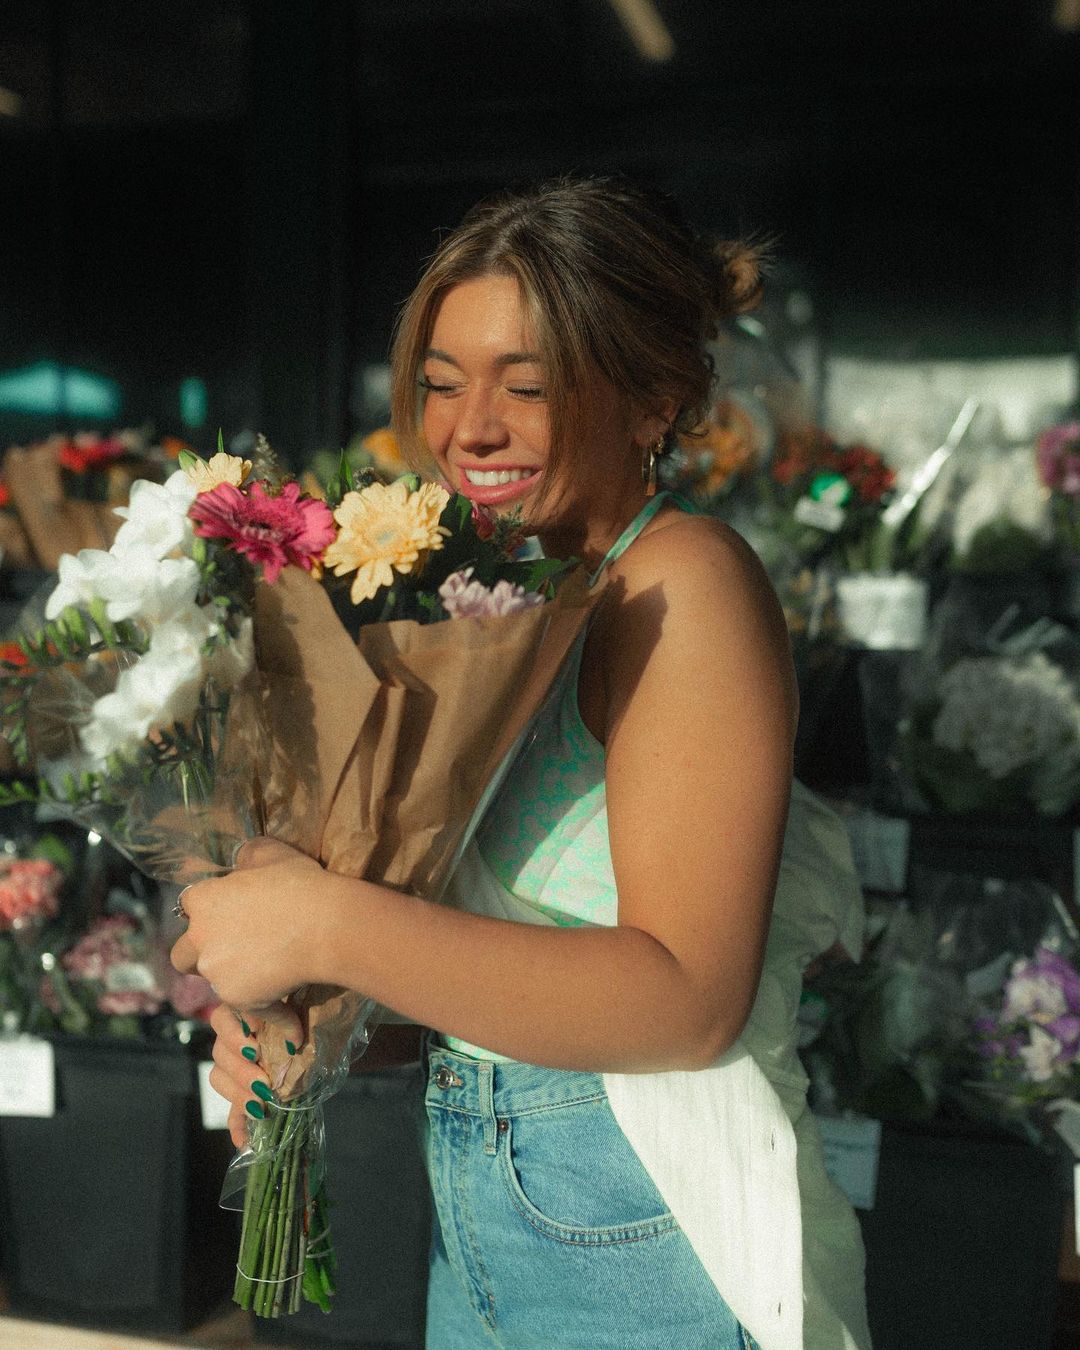 Tabitha Swatosh holding a flower bouquet.